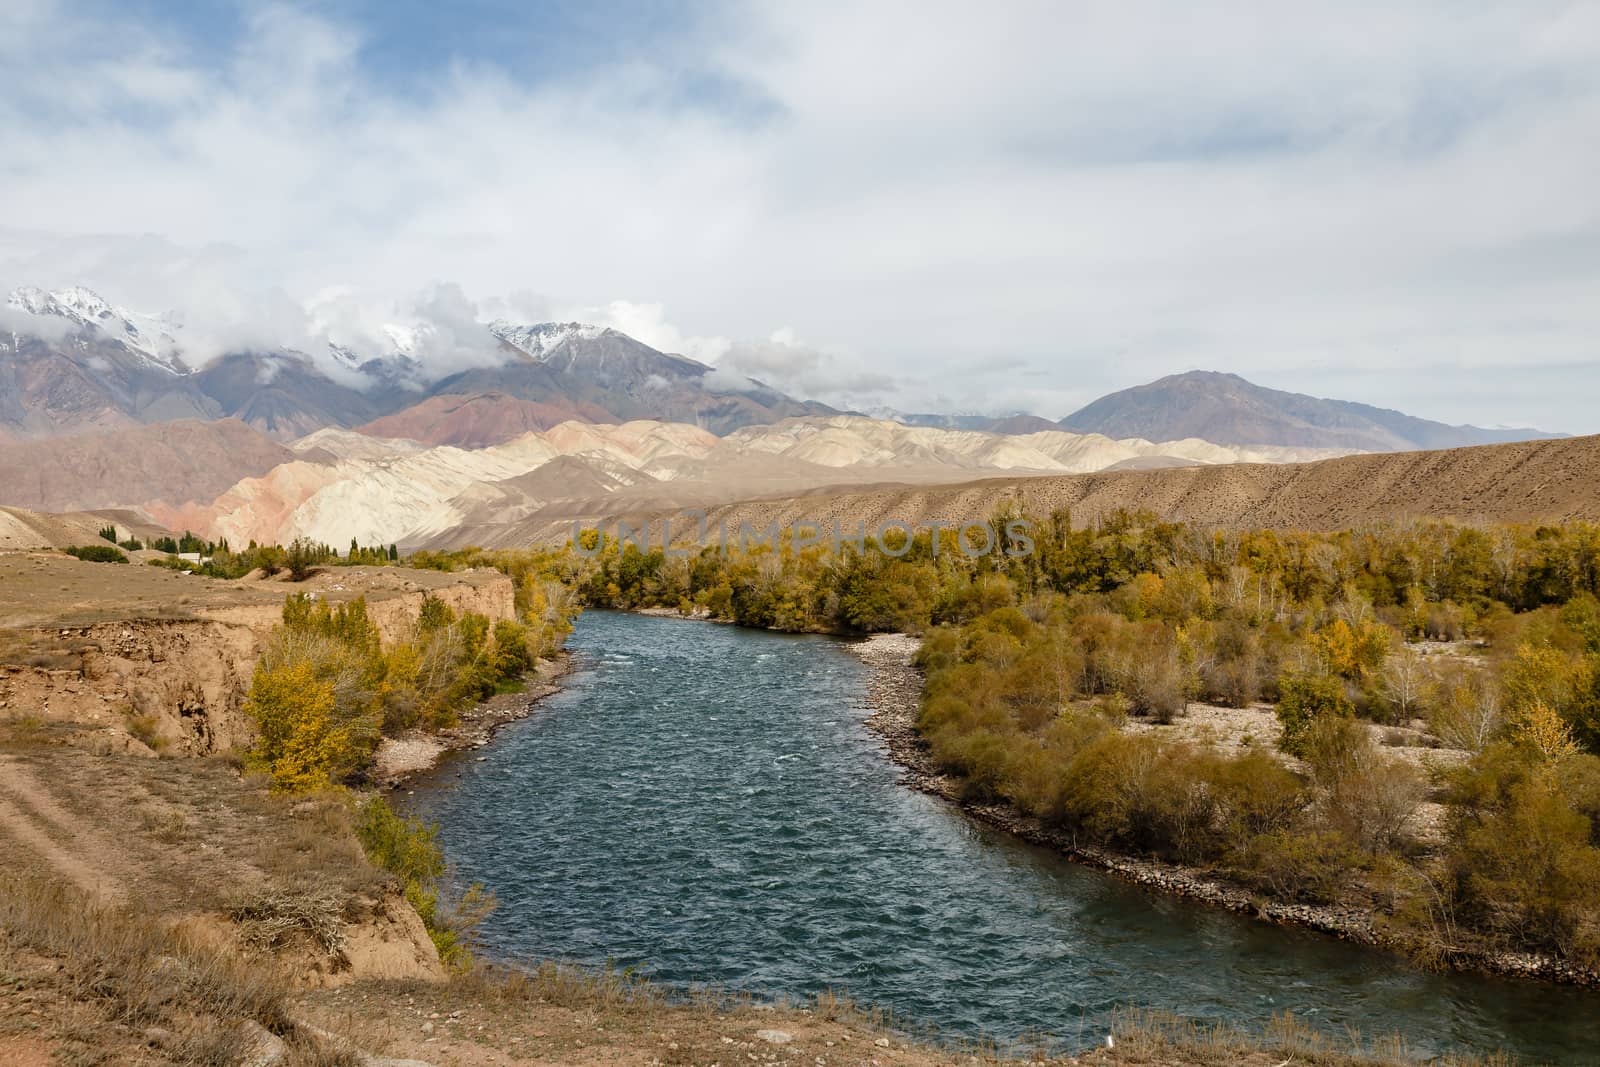 Kokemeren river, mountain river in the Naryn region of Kyrgyzstan.